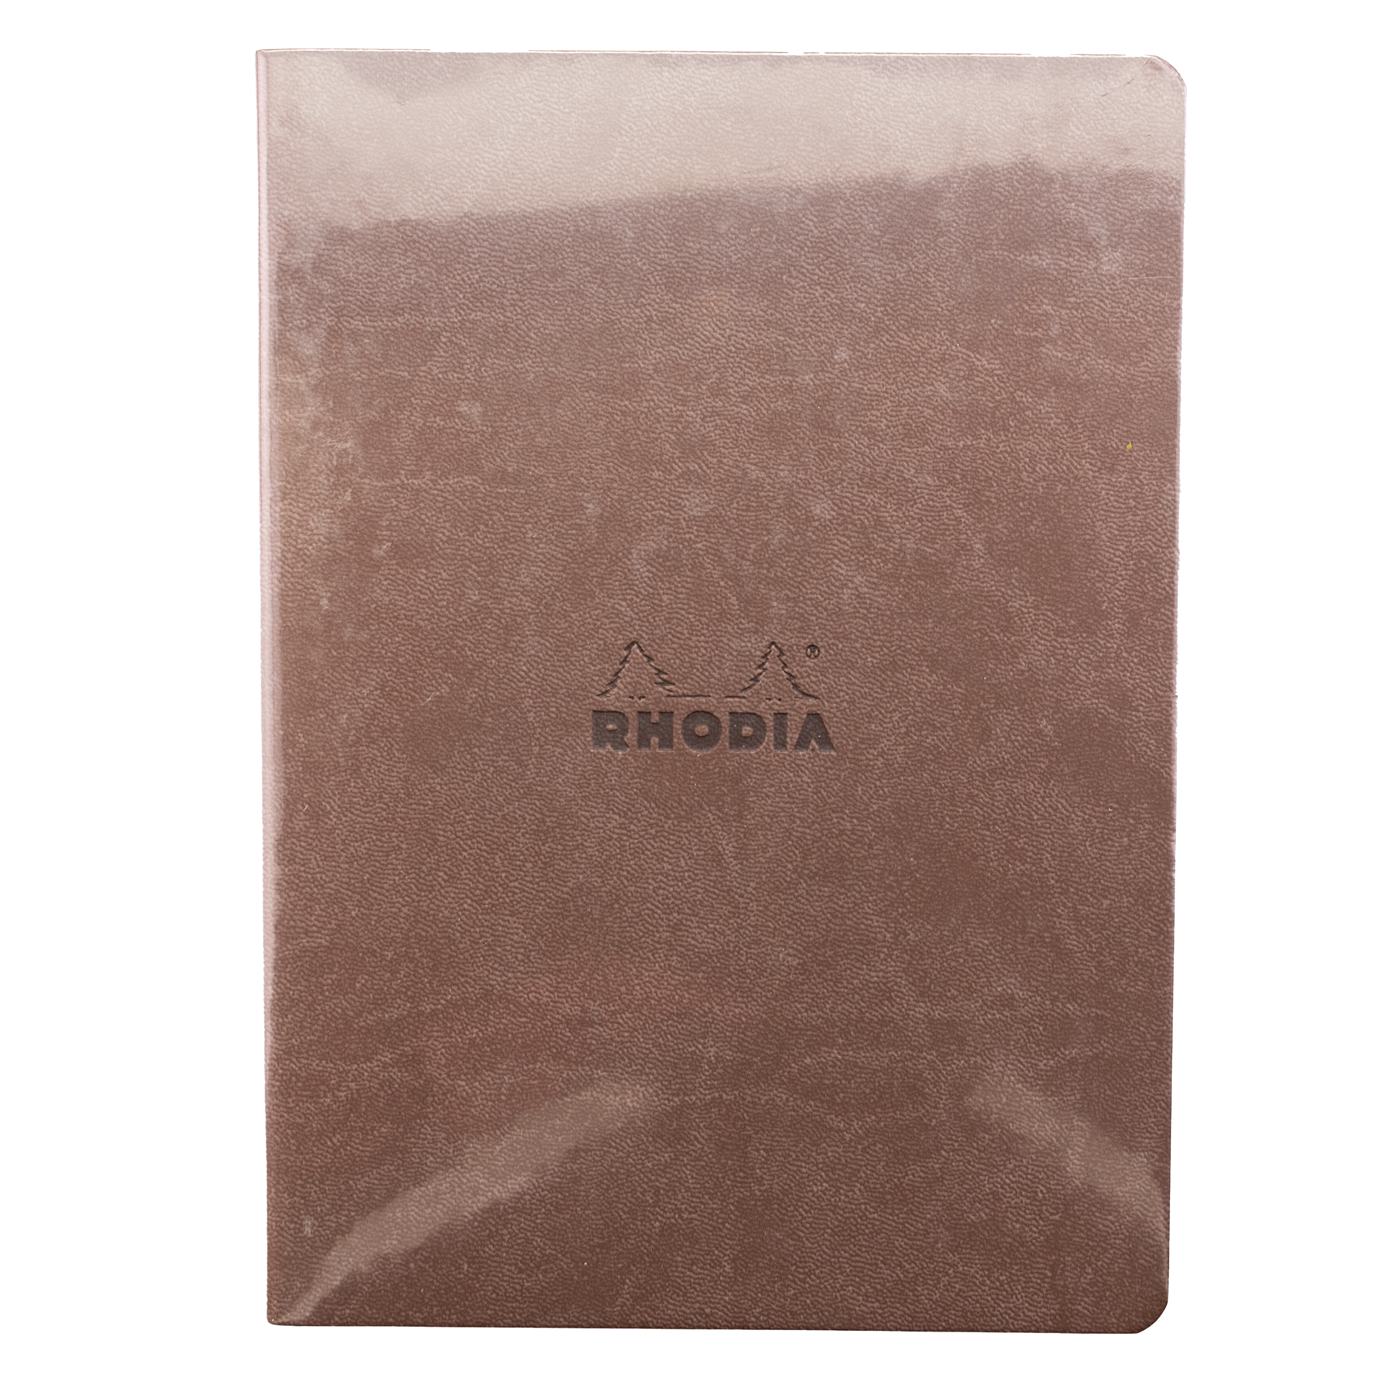 Rhodia Sewn Spine Rhodiarama A5 Notebook Chocolate